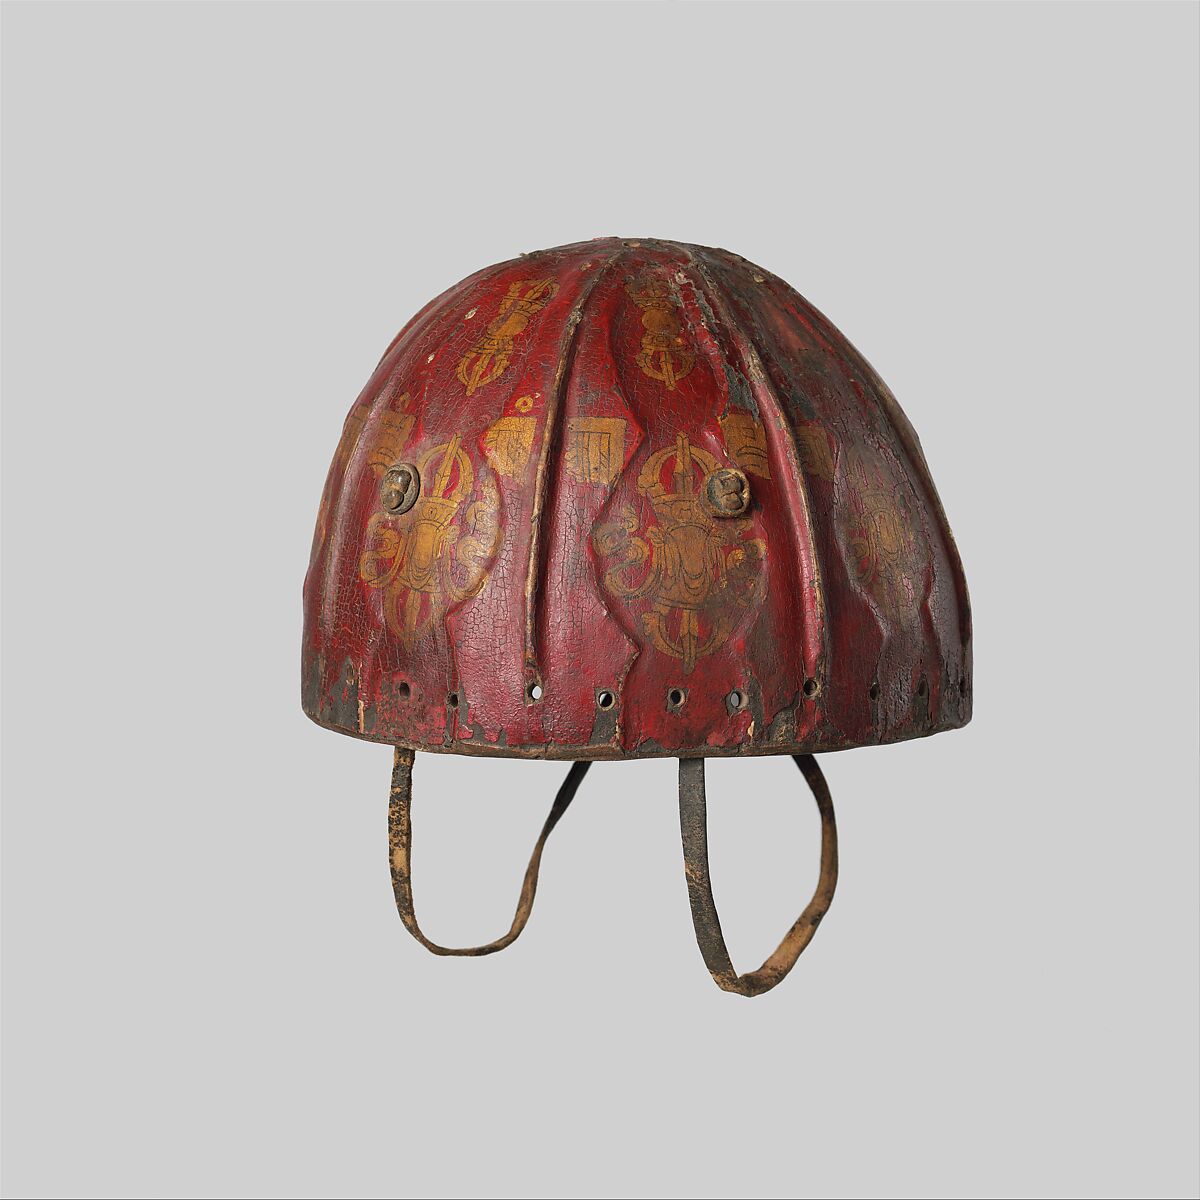 Leather Helmet with Auspicious Symbols, Leather, gold, shellac, pigments, Tibetan 